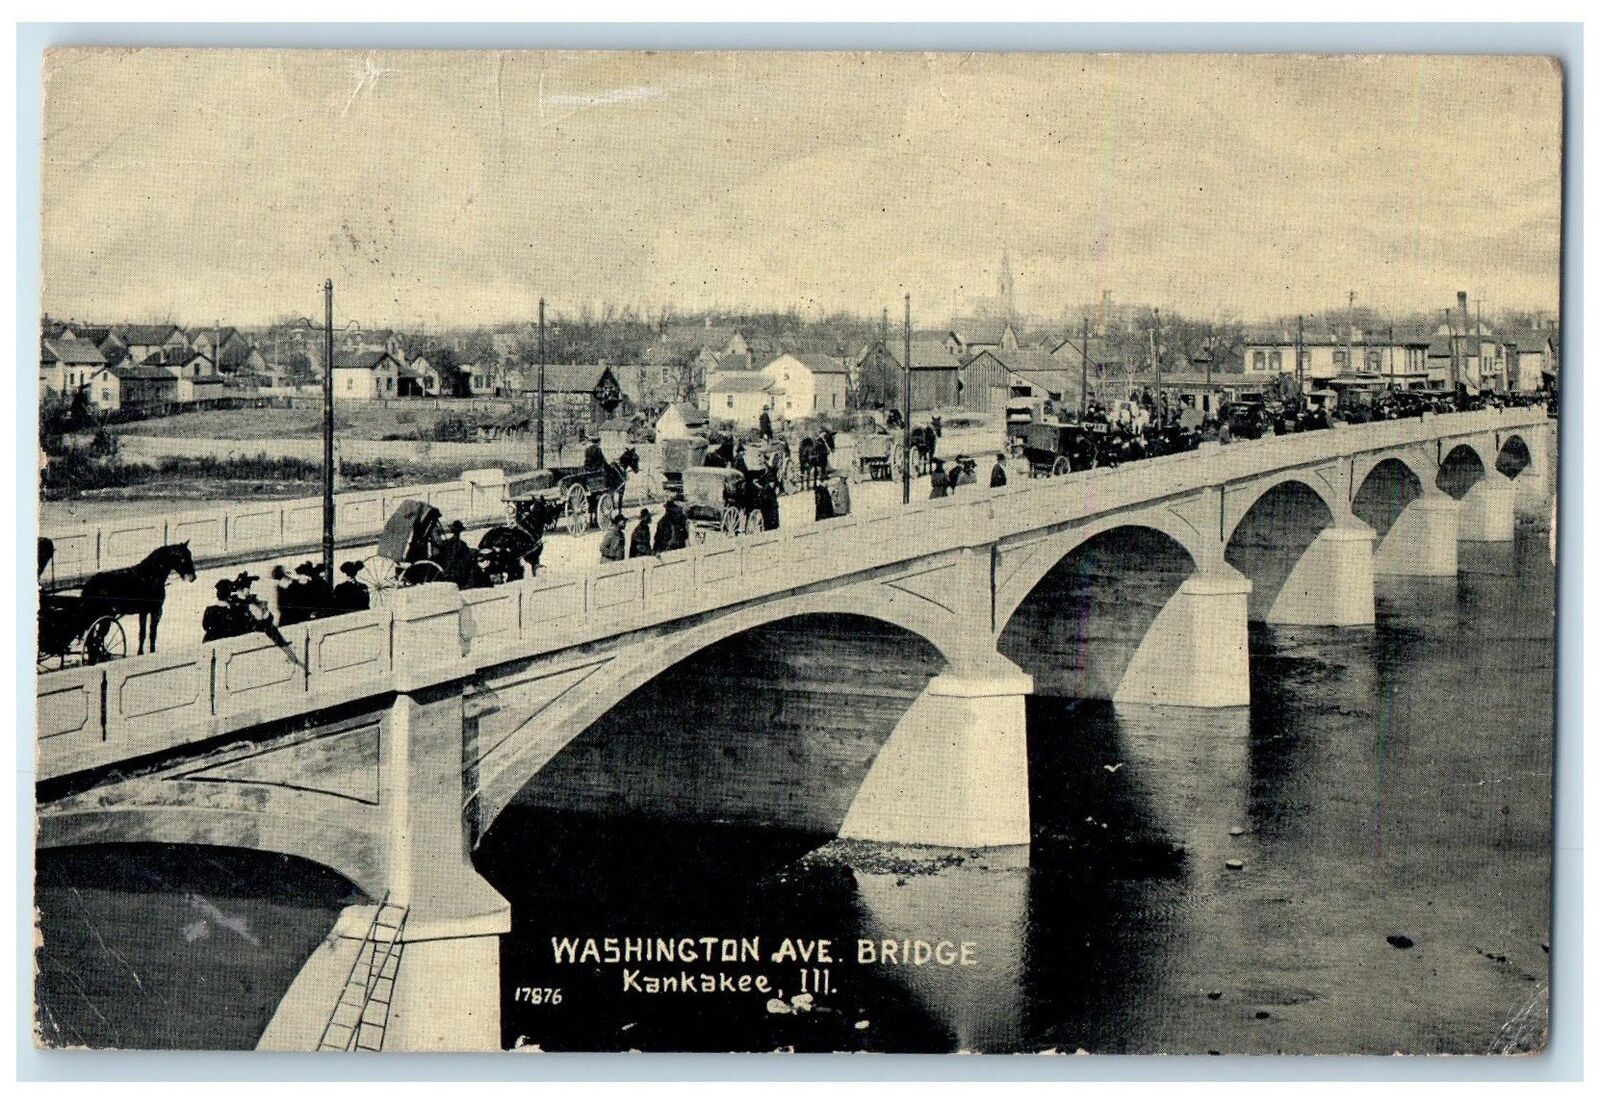 1907 Washington Ave Bridge Crowd Building Classic Car Kamkakee Illinois Postcard